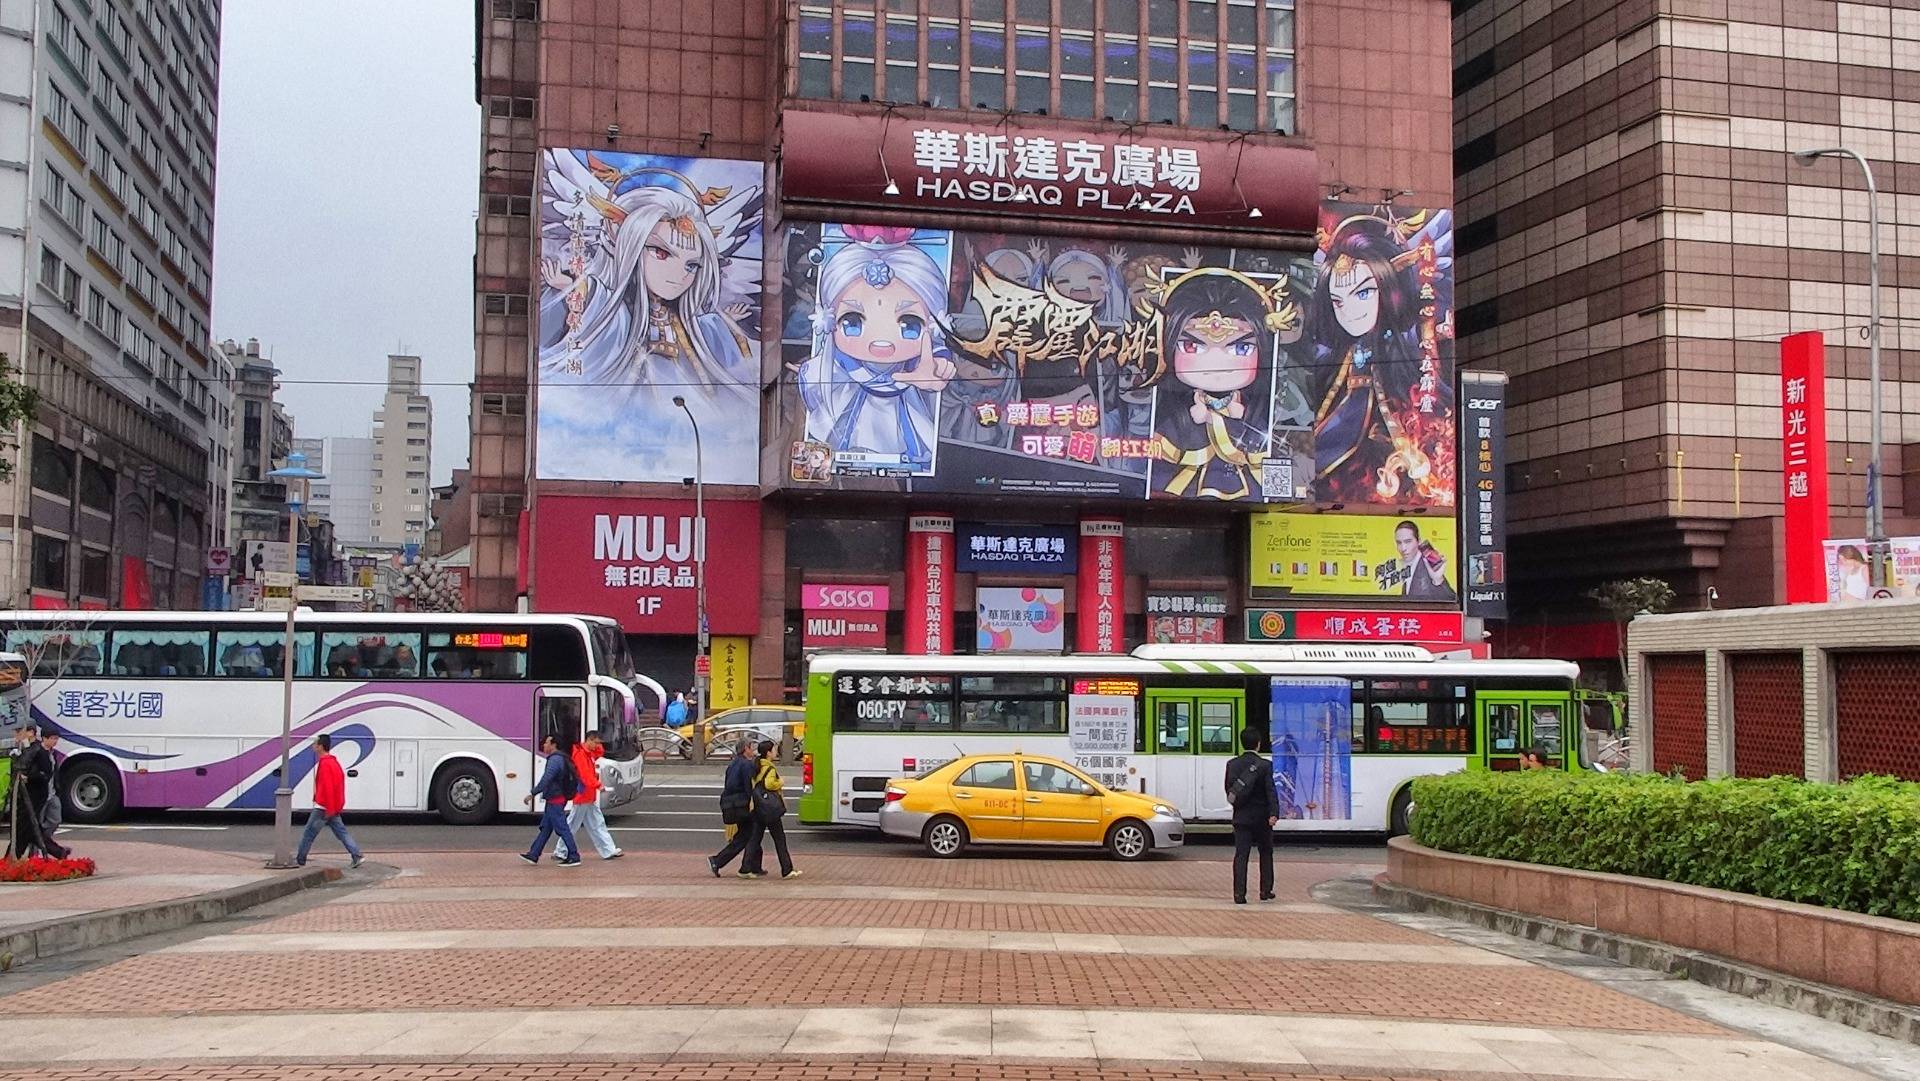 Taiwan is Manga land